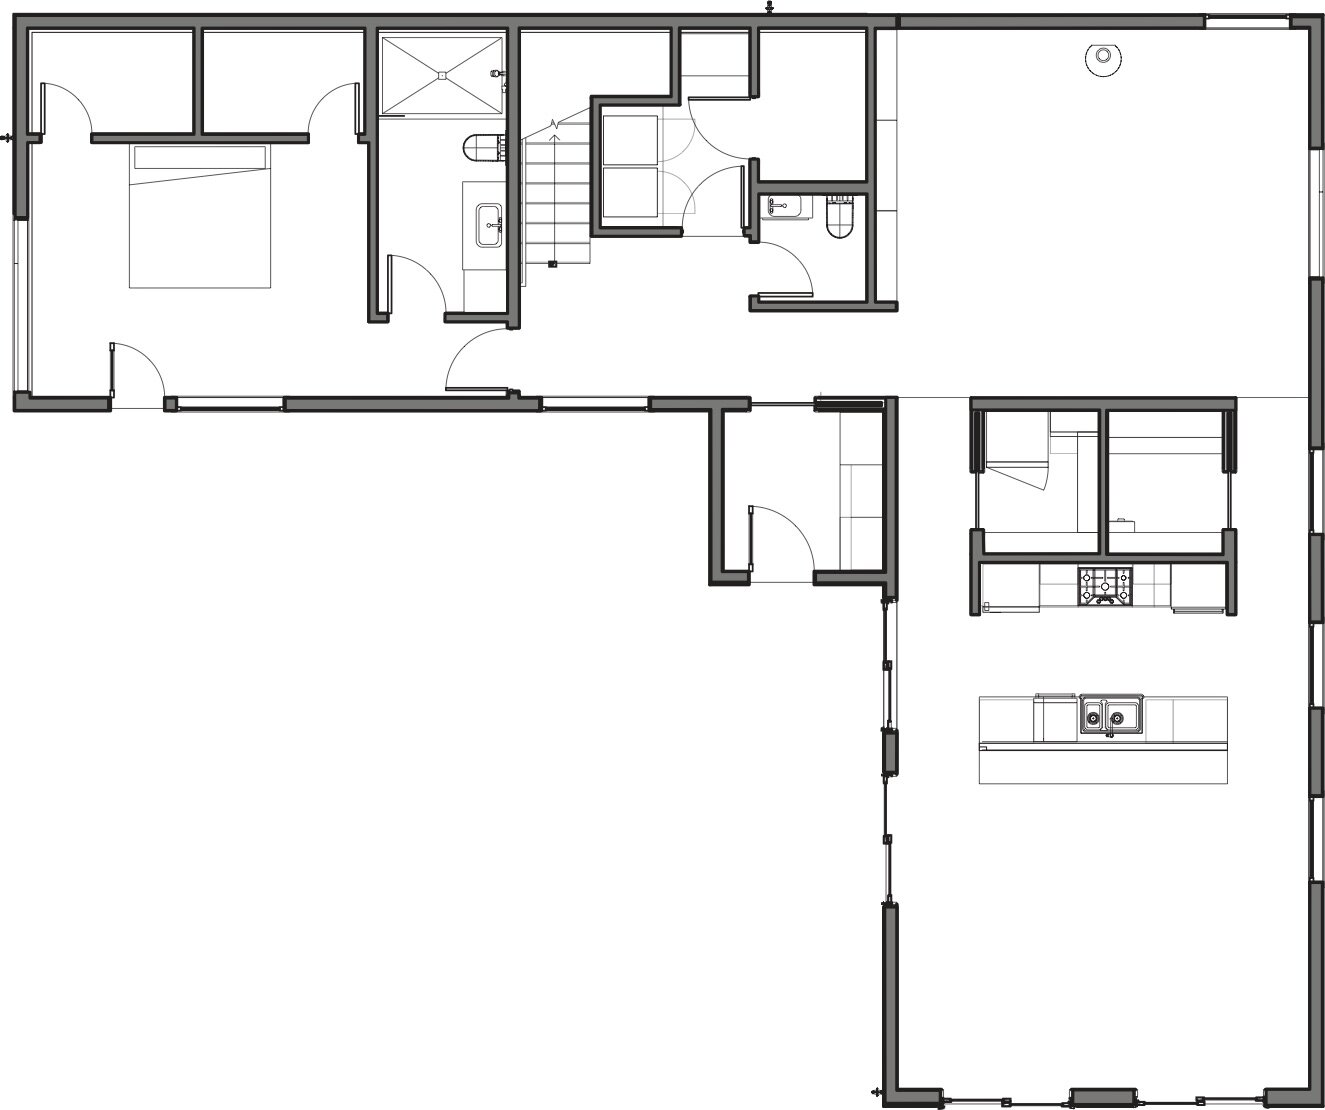 HewgleyResidence_KitchenDiningExpansion - Floor Plan - LEVEL 1 FLOOR PLAN.jpg